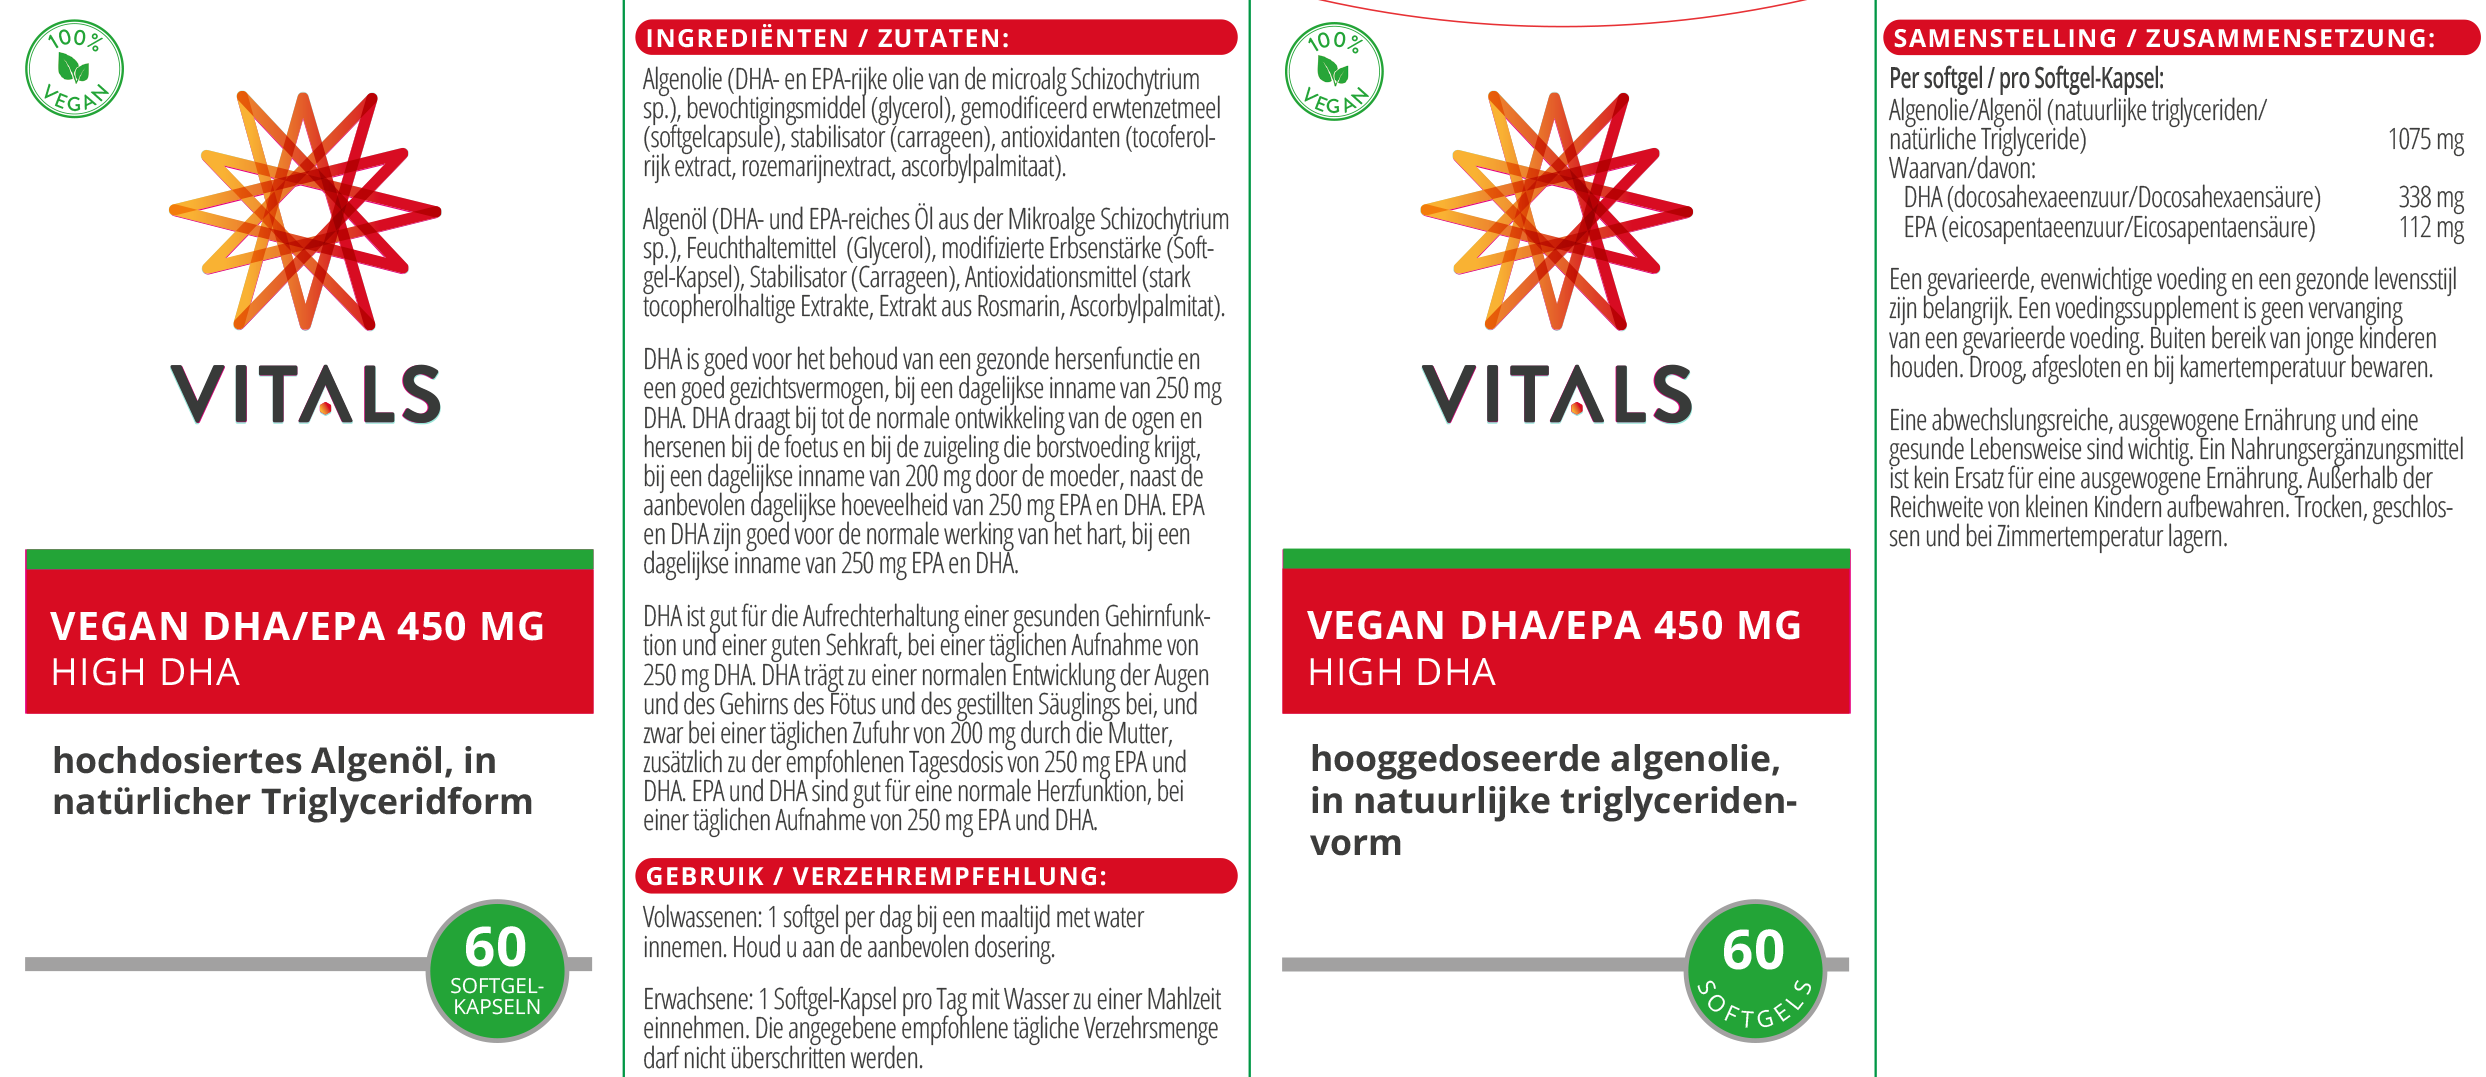 Vegan DHA/EPA 450 mg